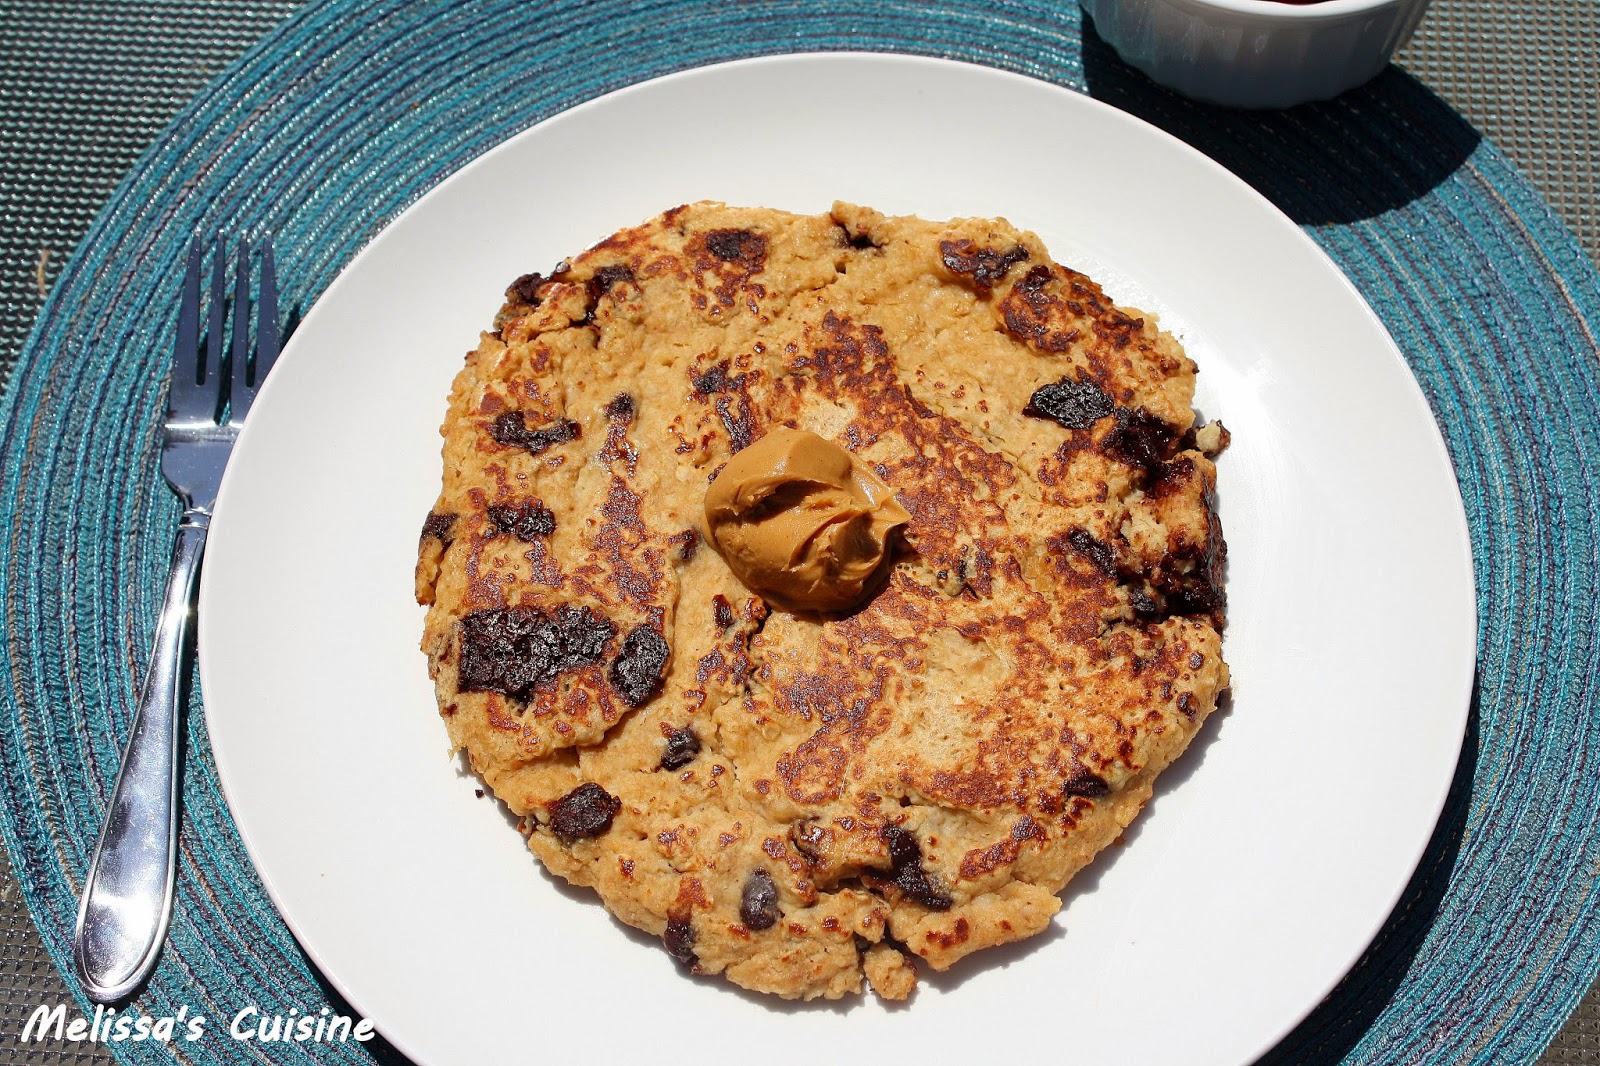 Melissa's Cuisine: Single Serving Oatmeal Pancake